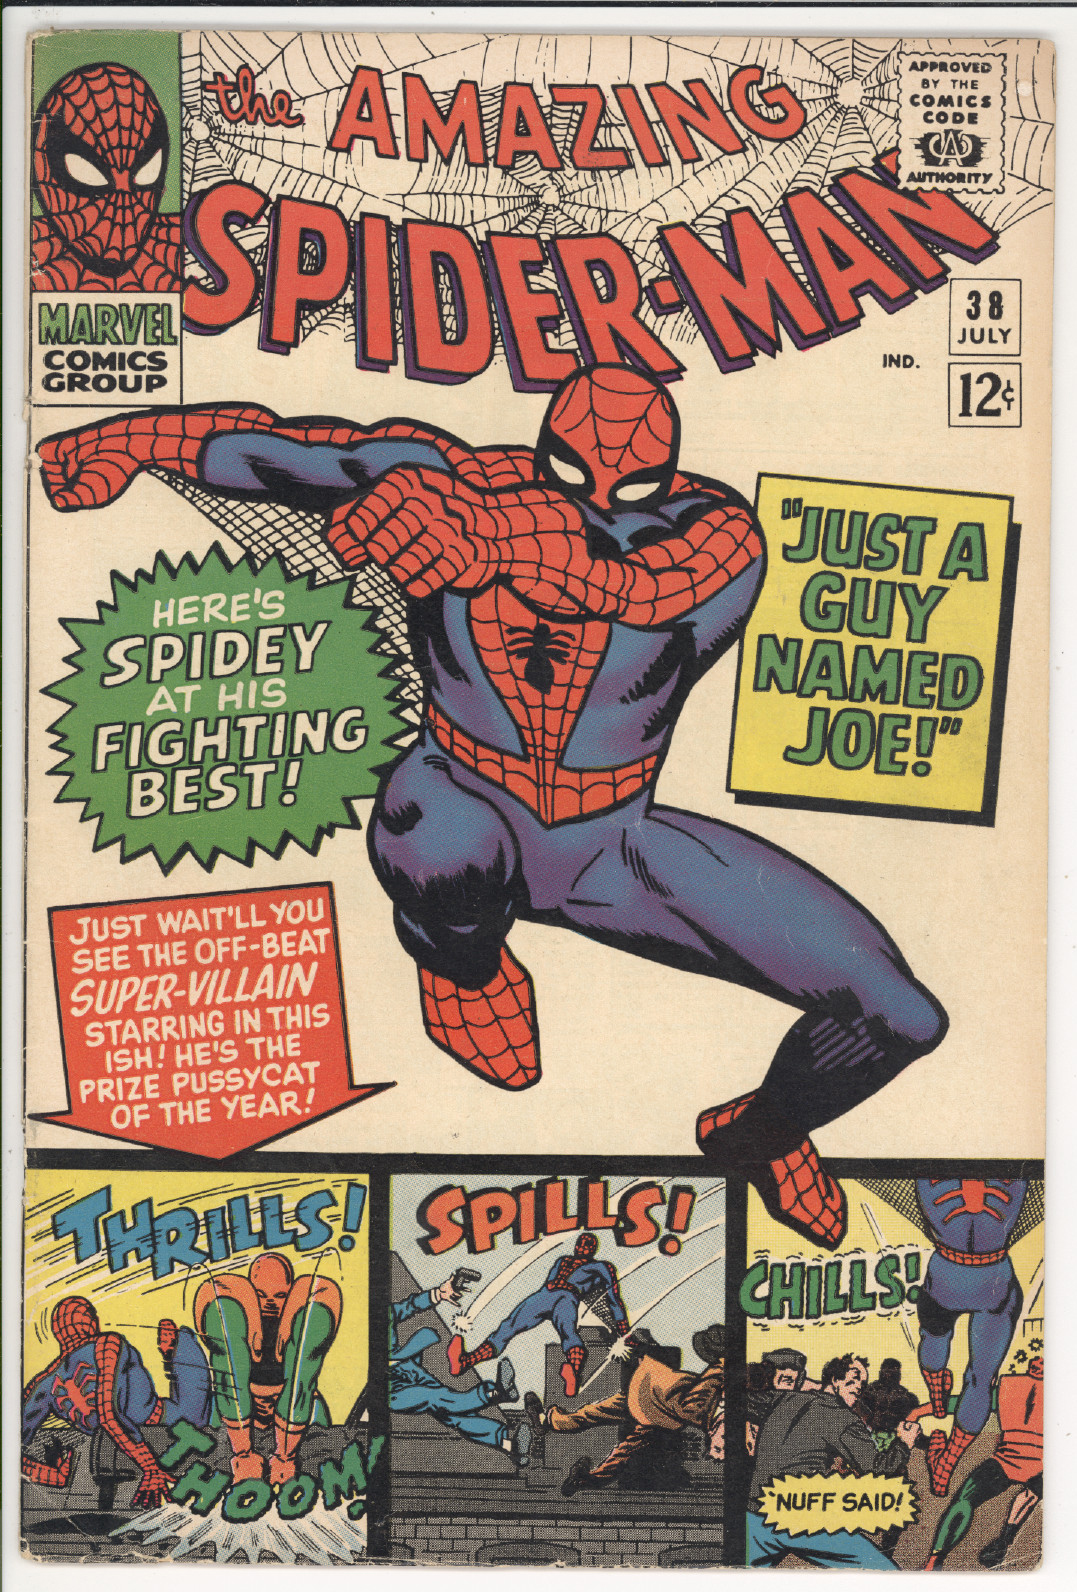 Amazing Spider-Man #38 front